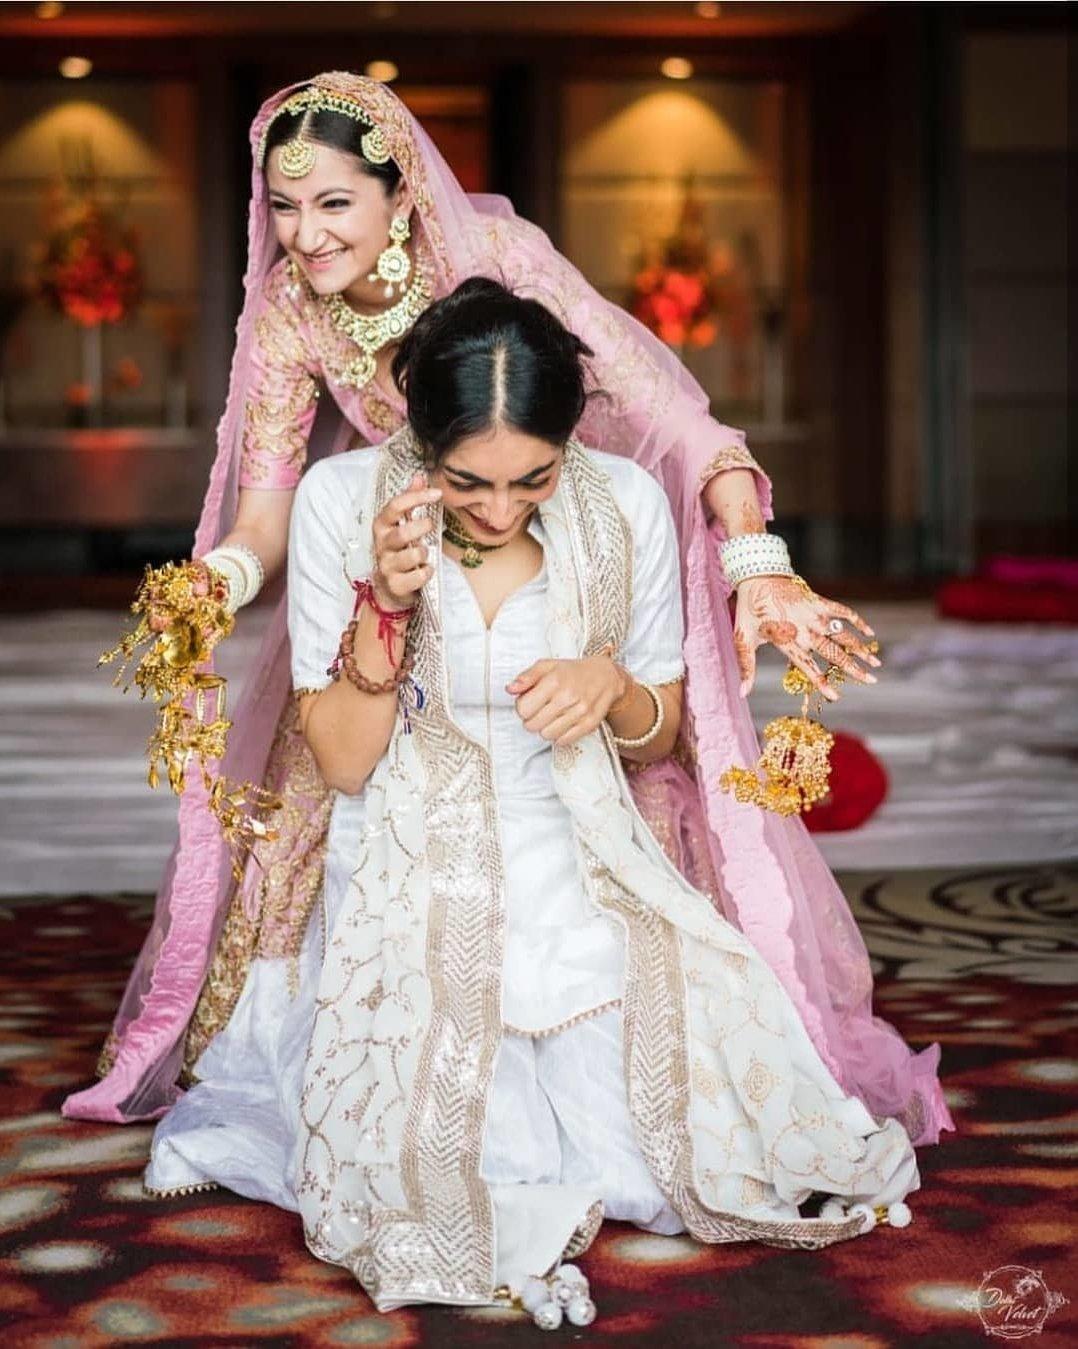 The Latest Lancha Dress Designs Are Here To Take Your Breath Away |  Pakistani wedding dress, Designer dresses, Dress